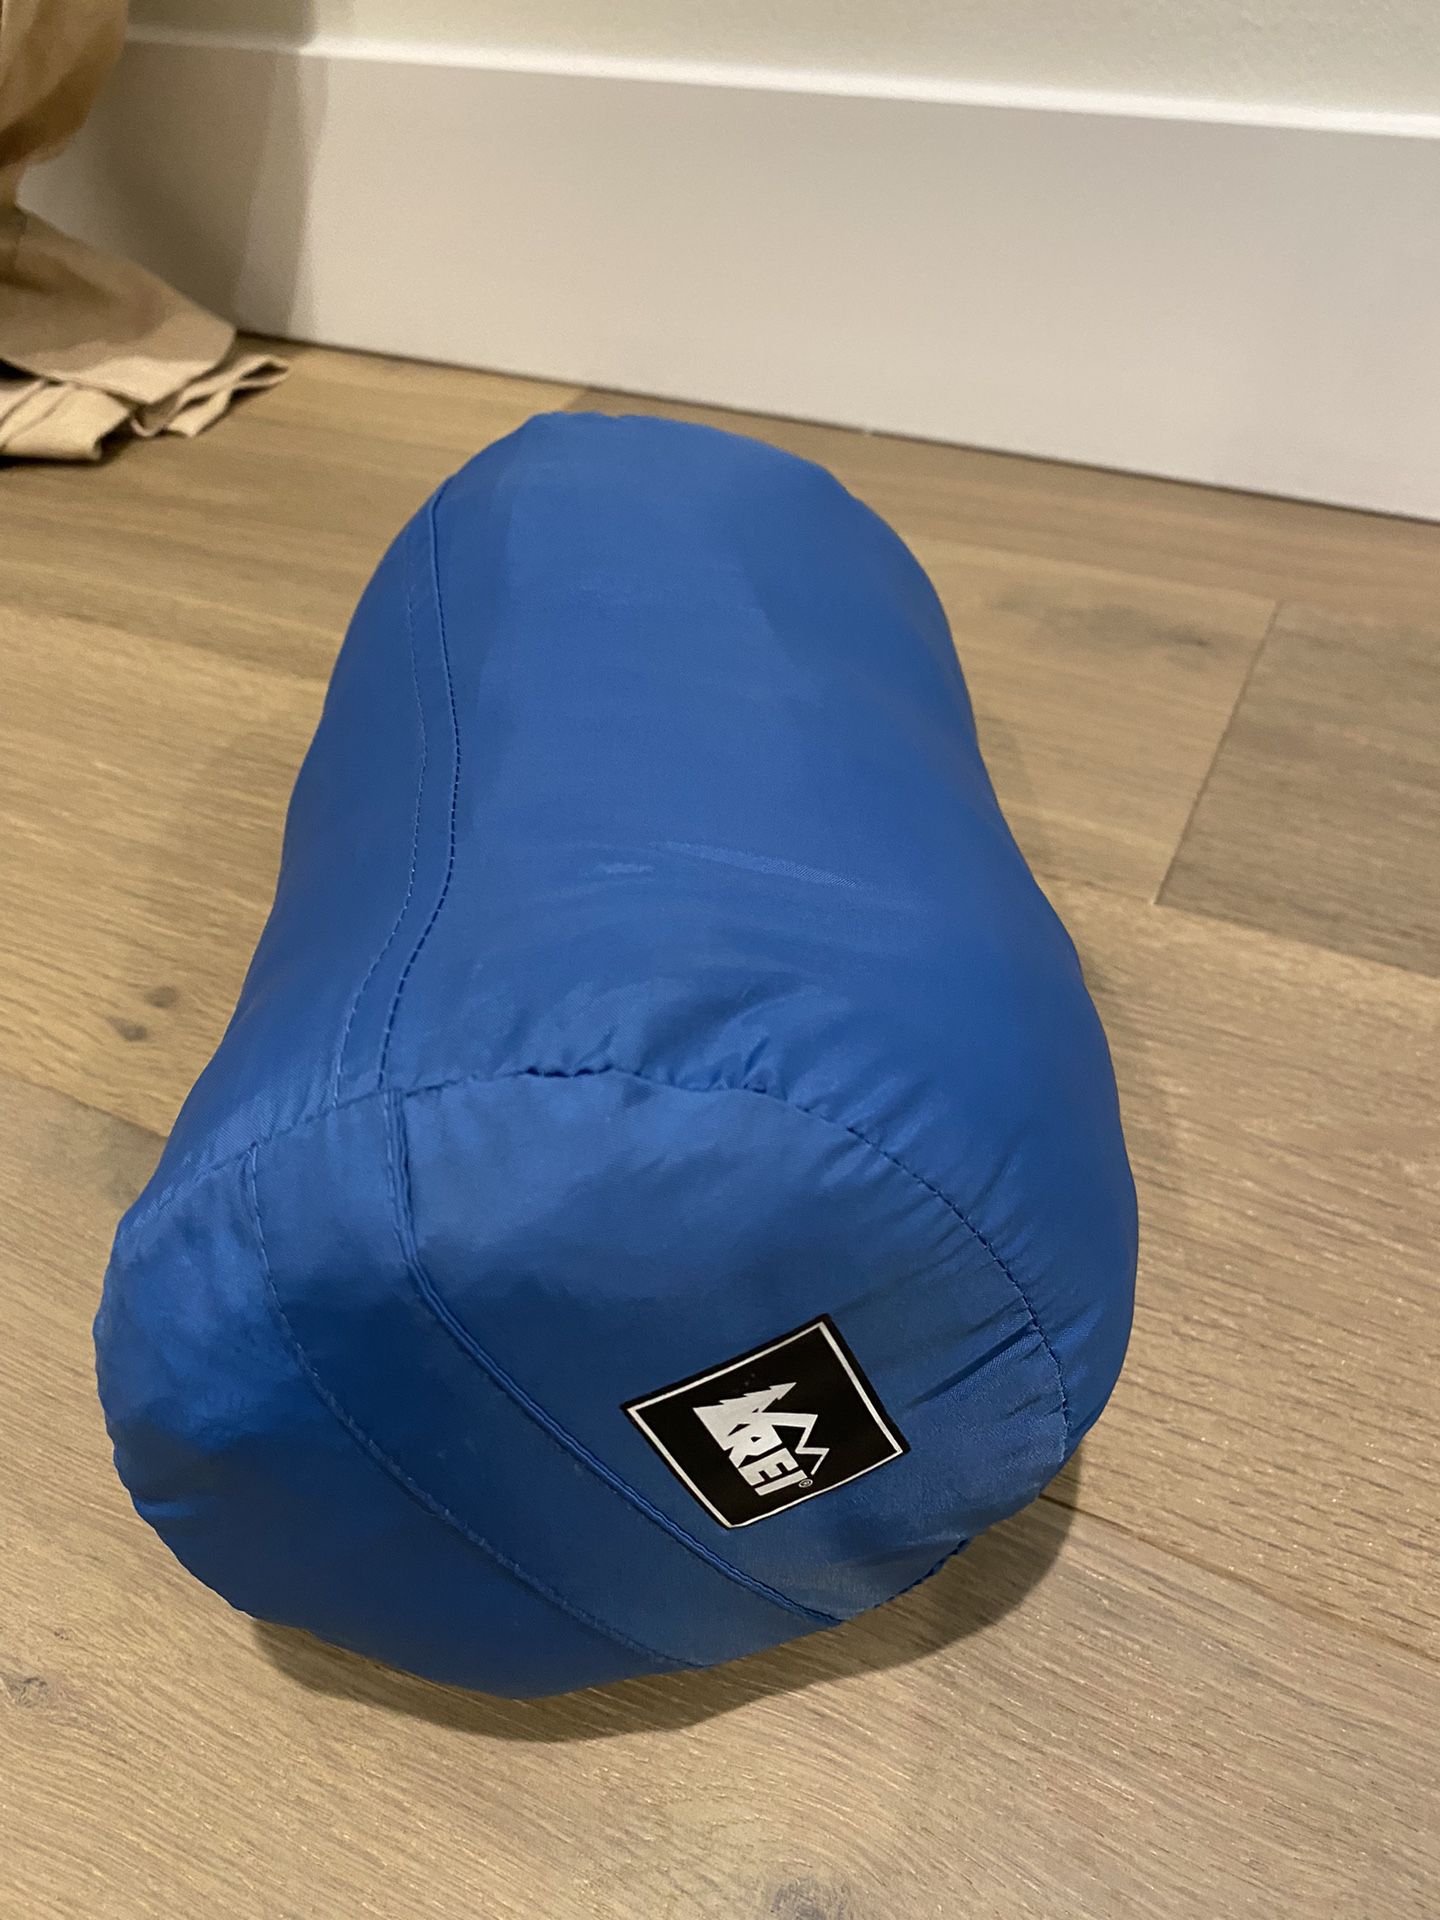 REI Travel Sleeping Bag 